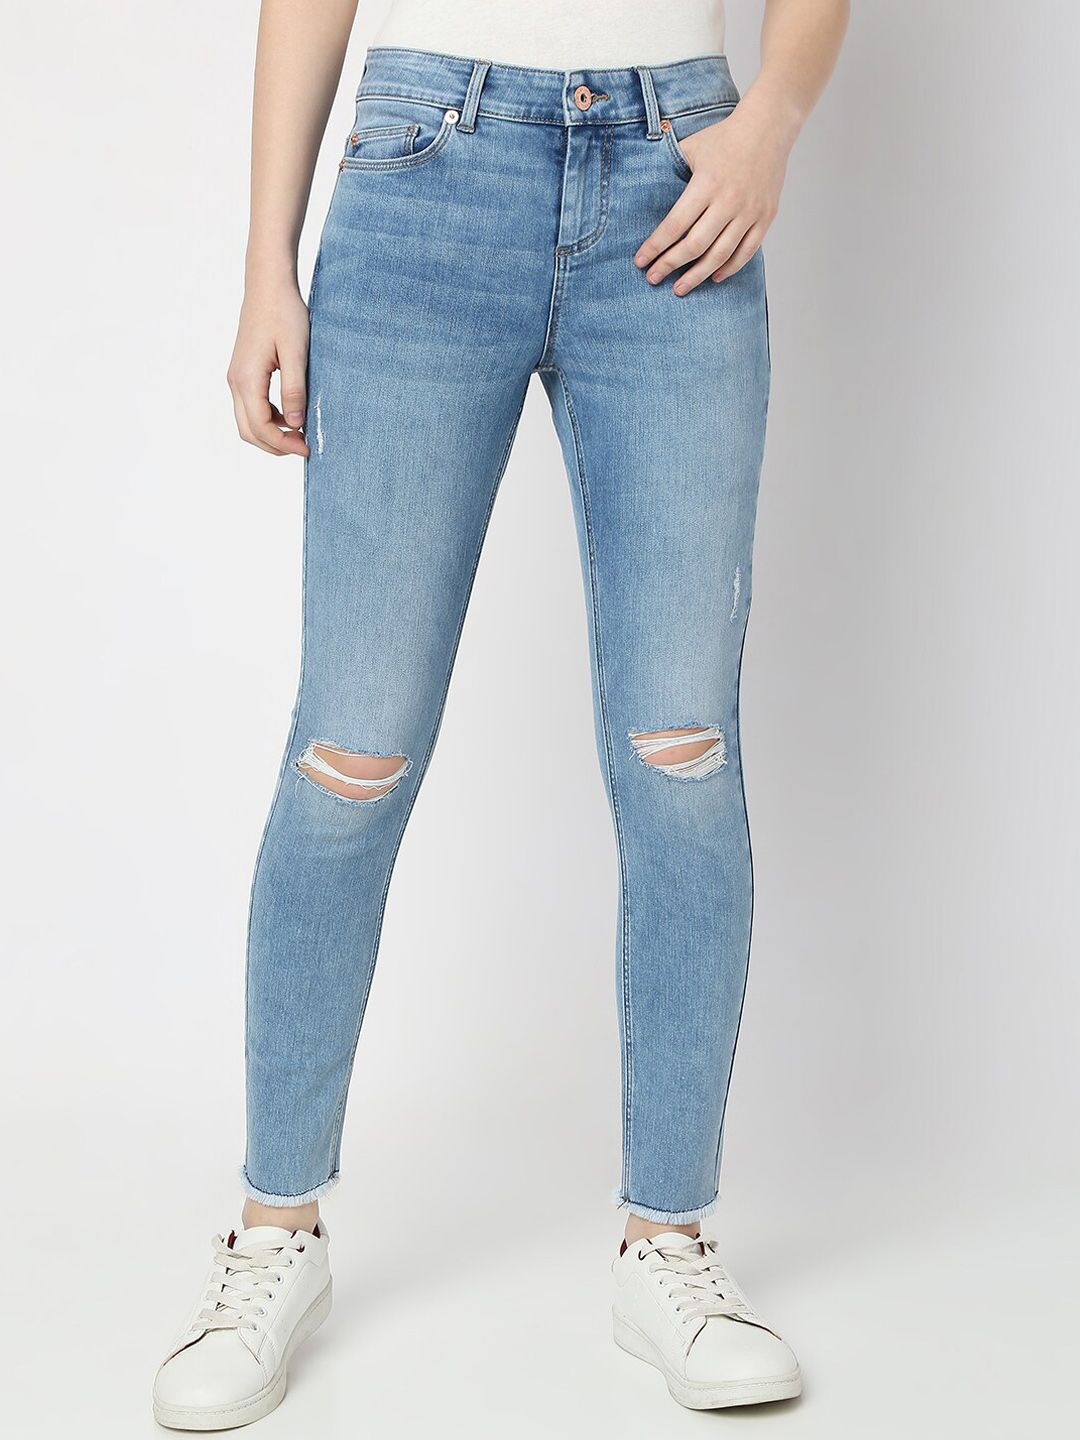 Vero Moda Women Skinny Fit Slash Knee Light Fade Stretchable Jeans